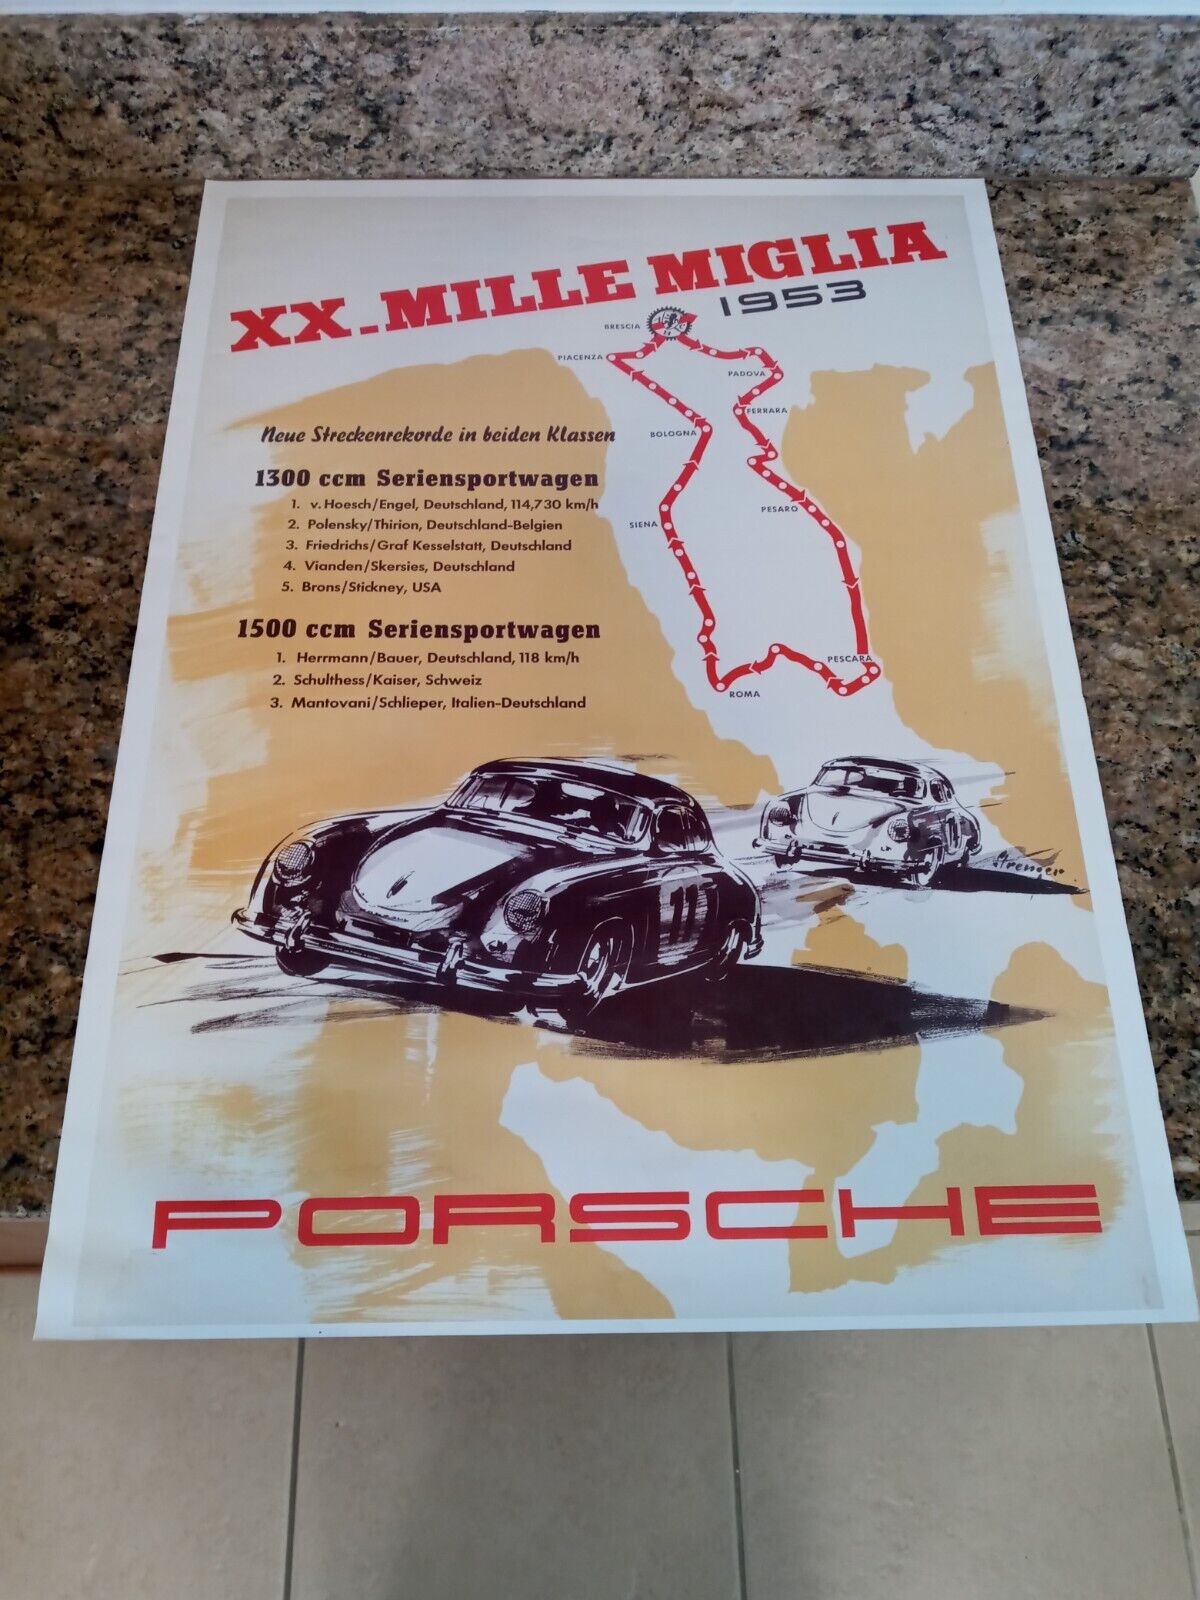 Vintage Porsche racing Poster XX. Mille Miglia 1953